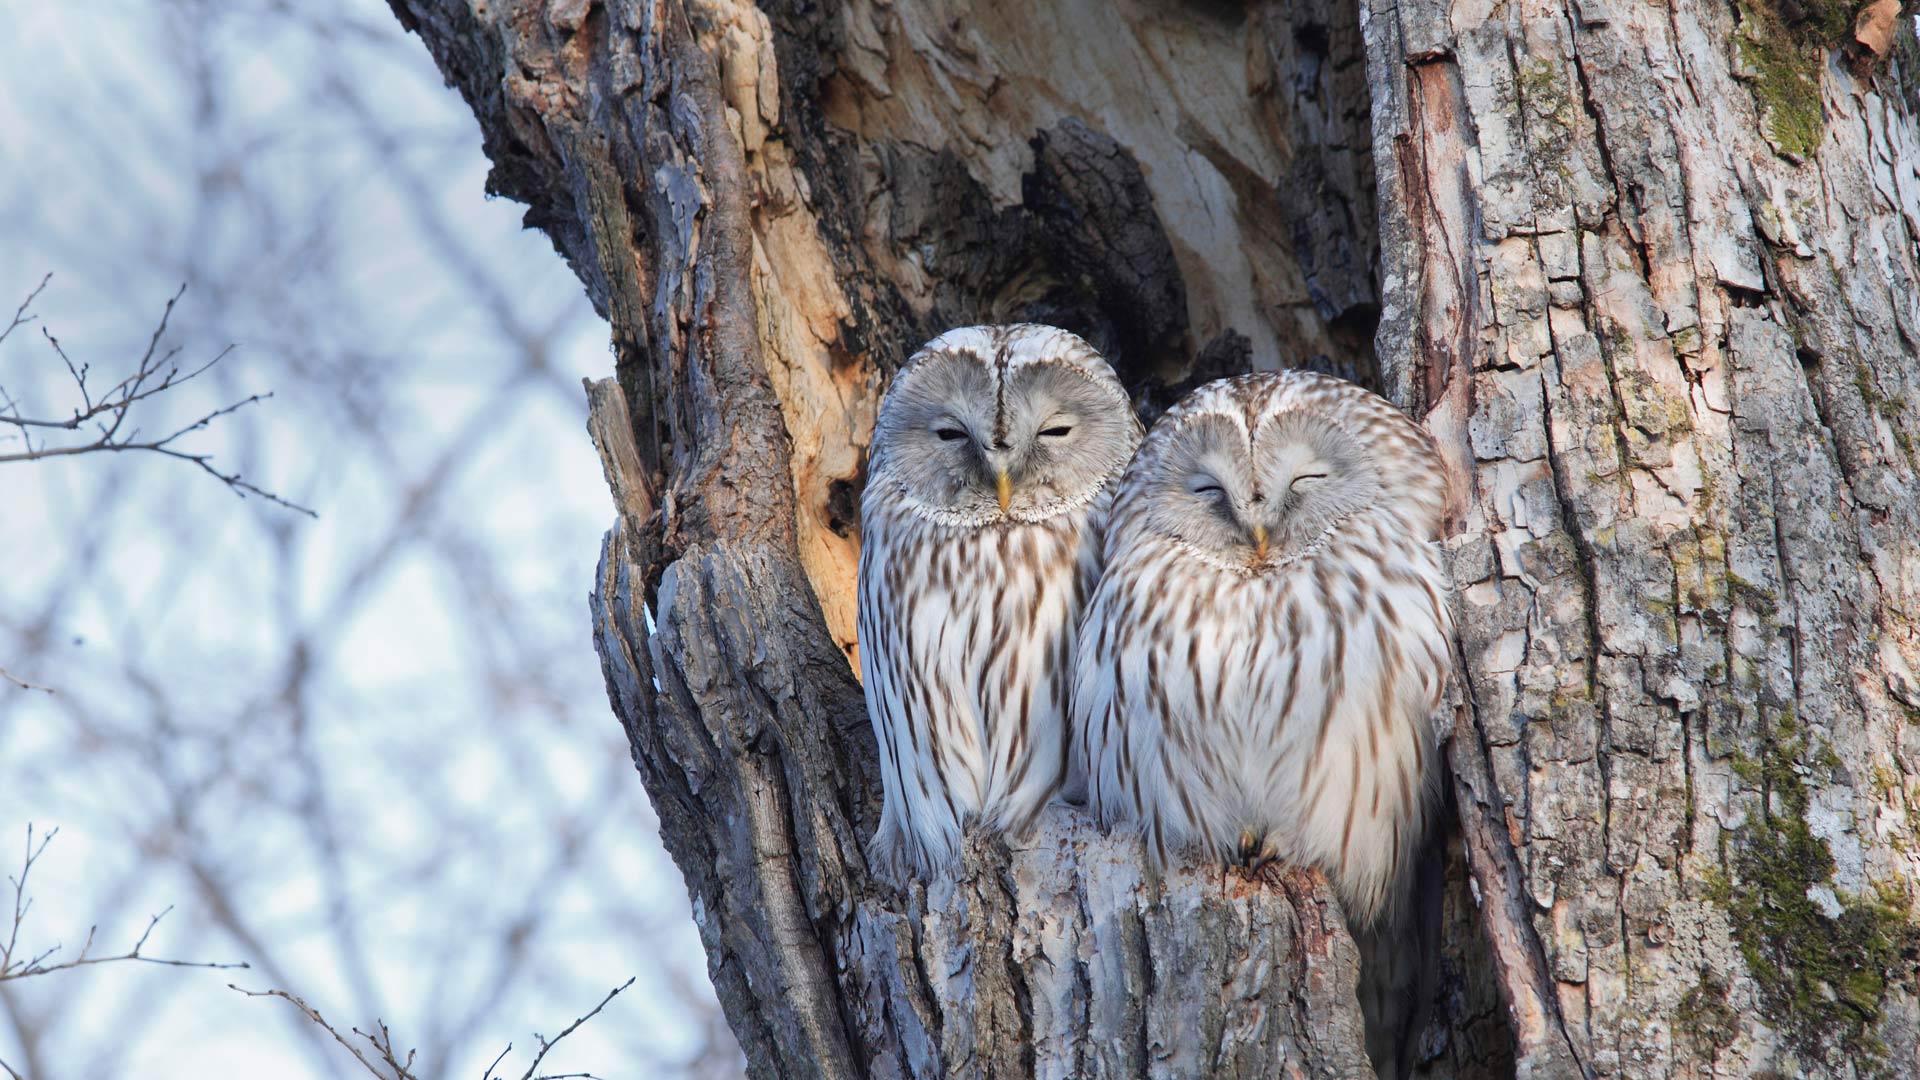 Winter Owls